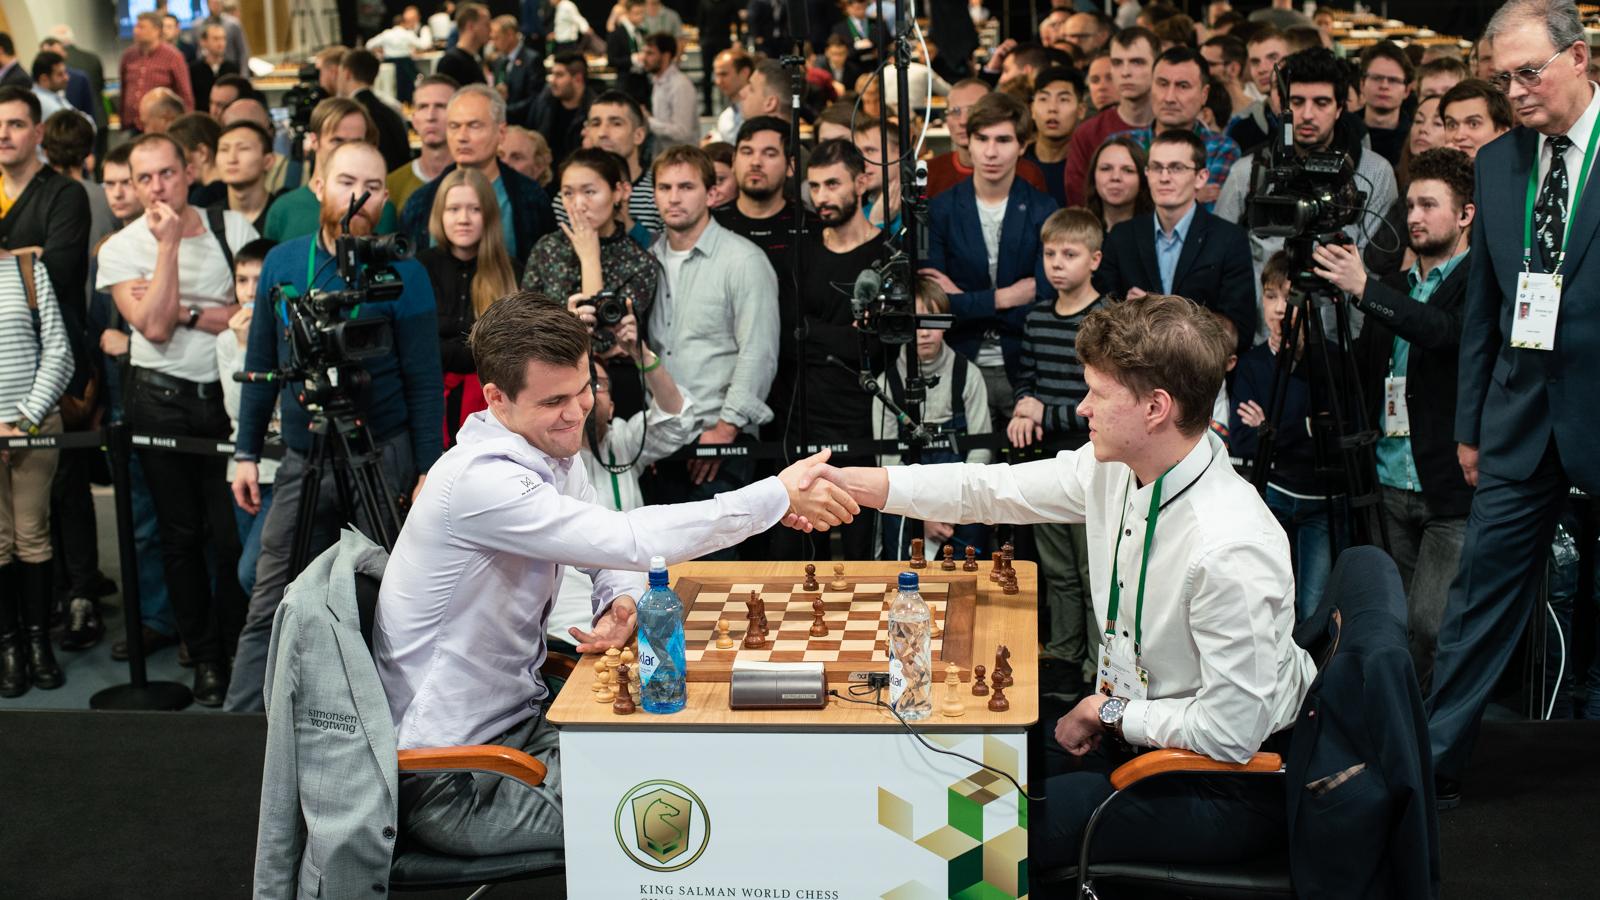 St. Petersburg, Russia - December 30, 2018: Grandmaster Alireza